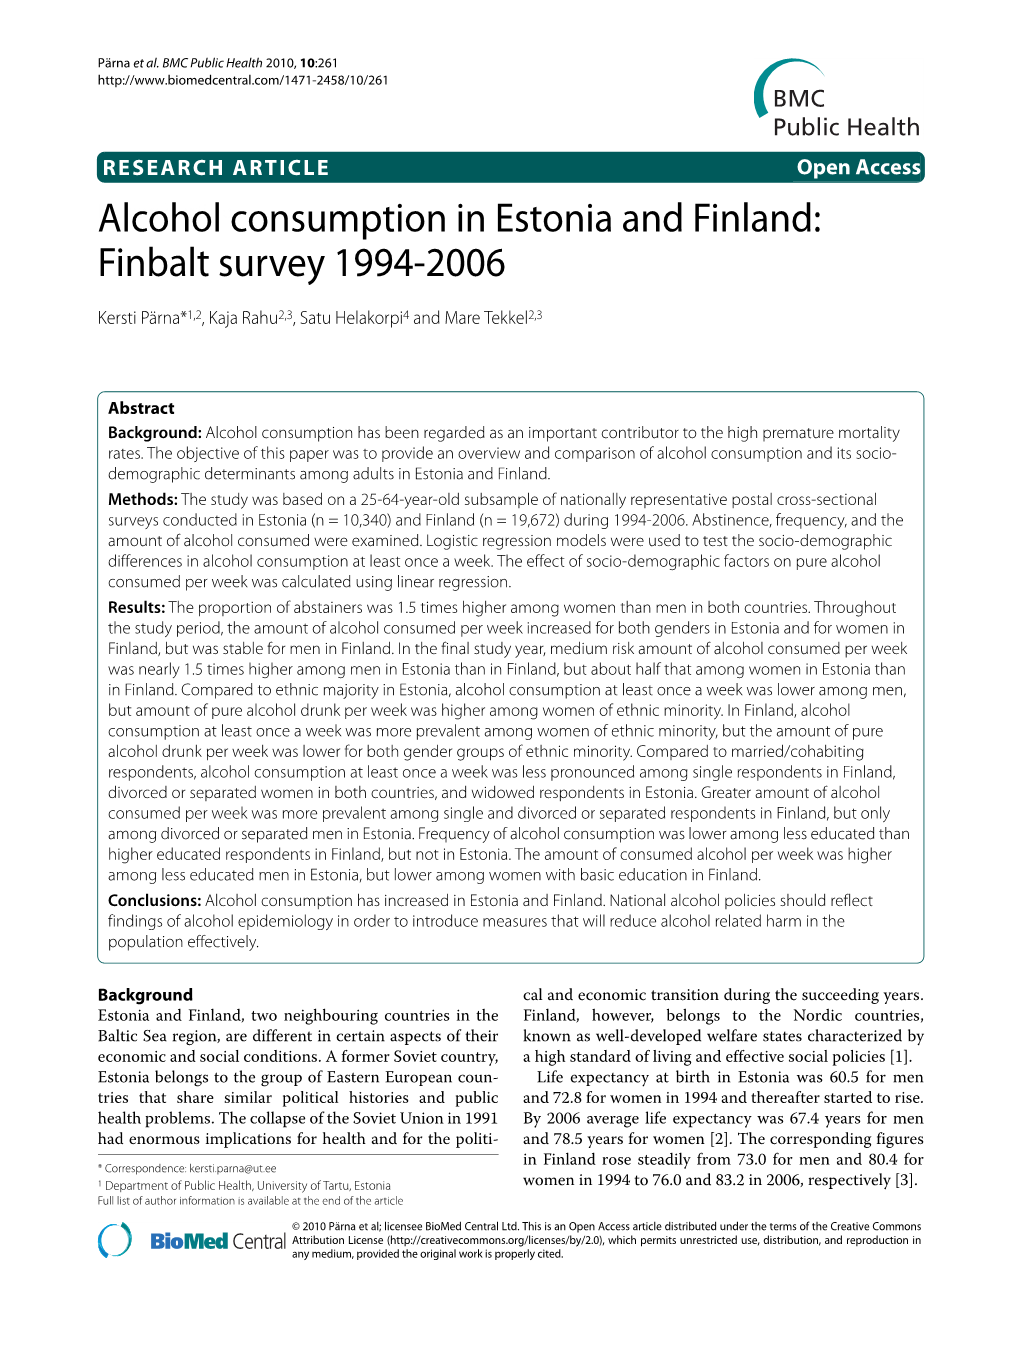 Alcohol Consumption in Estonia and Finland: Finbalt Survey 1994-2006 BMC Public Health 2010, 10:261